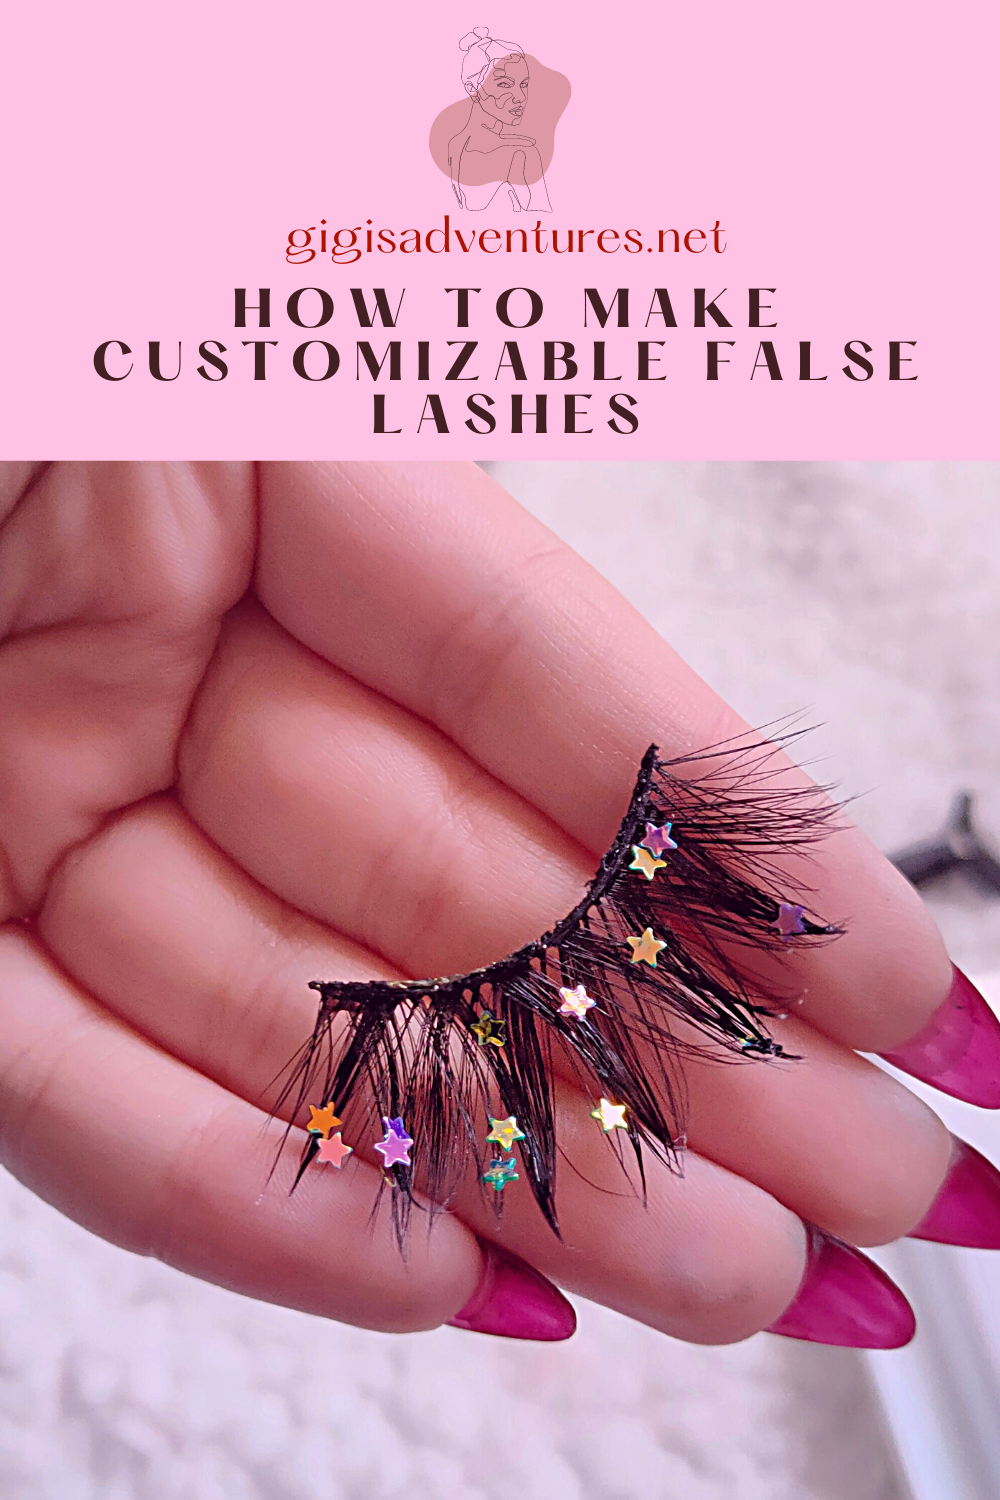 How To Make Customizable False Lashes | DIY Customizable False Lashes